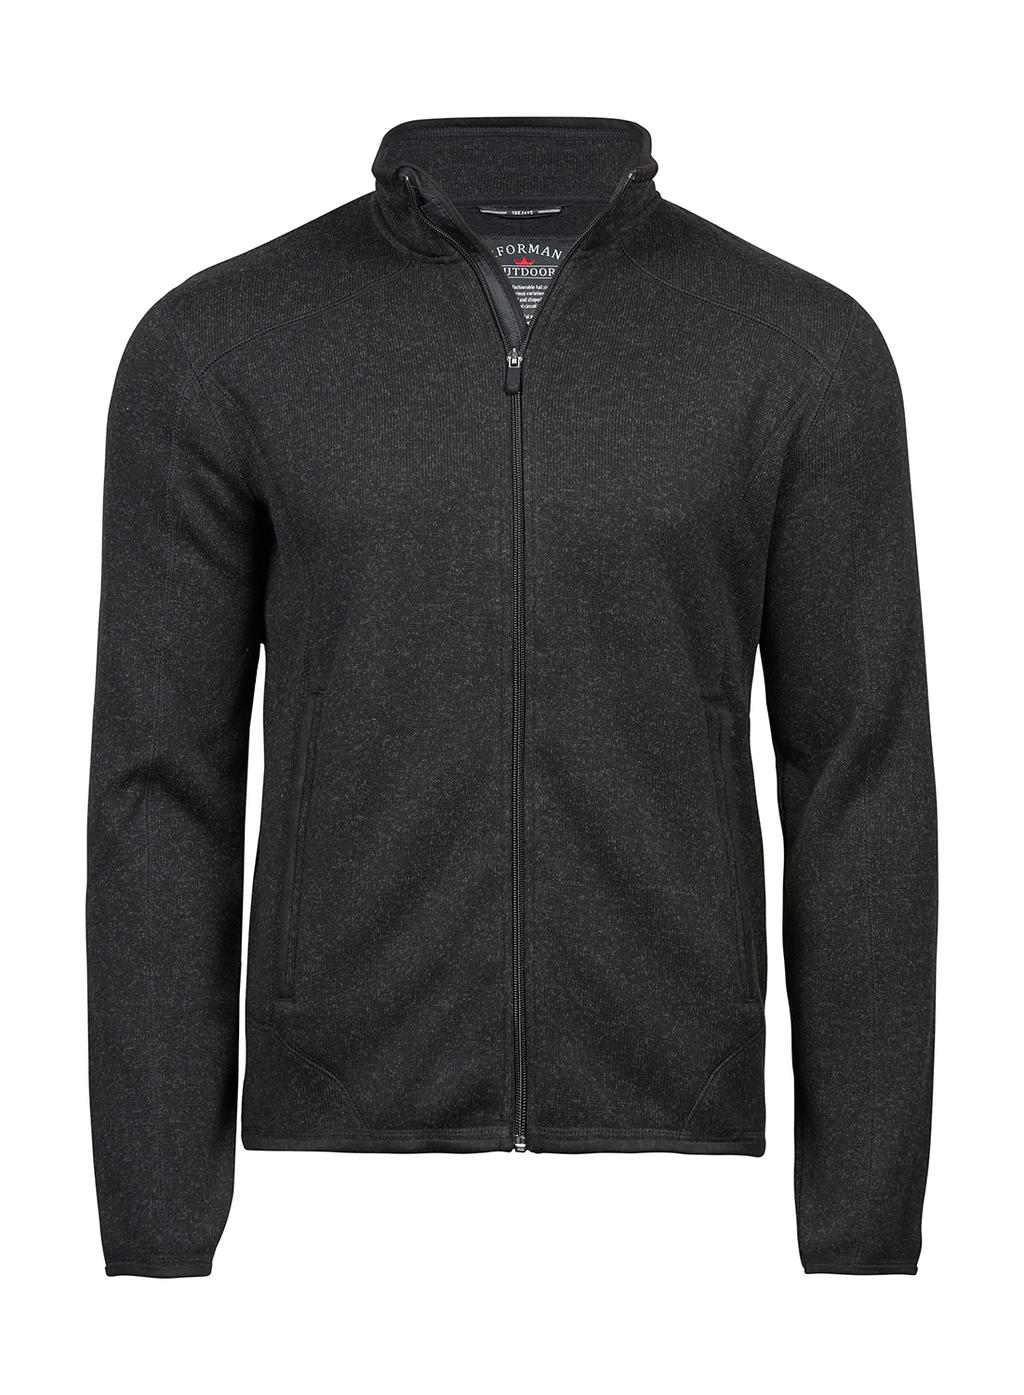  Outdoor Fleece Jacket in Farbe Black